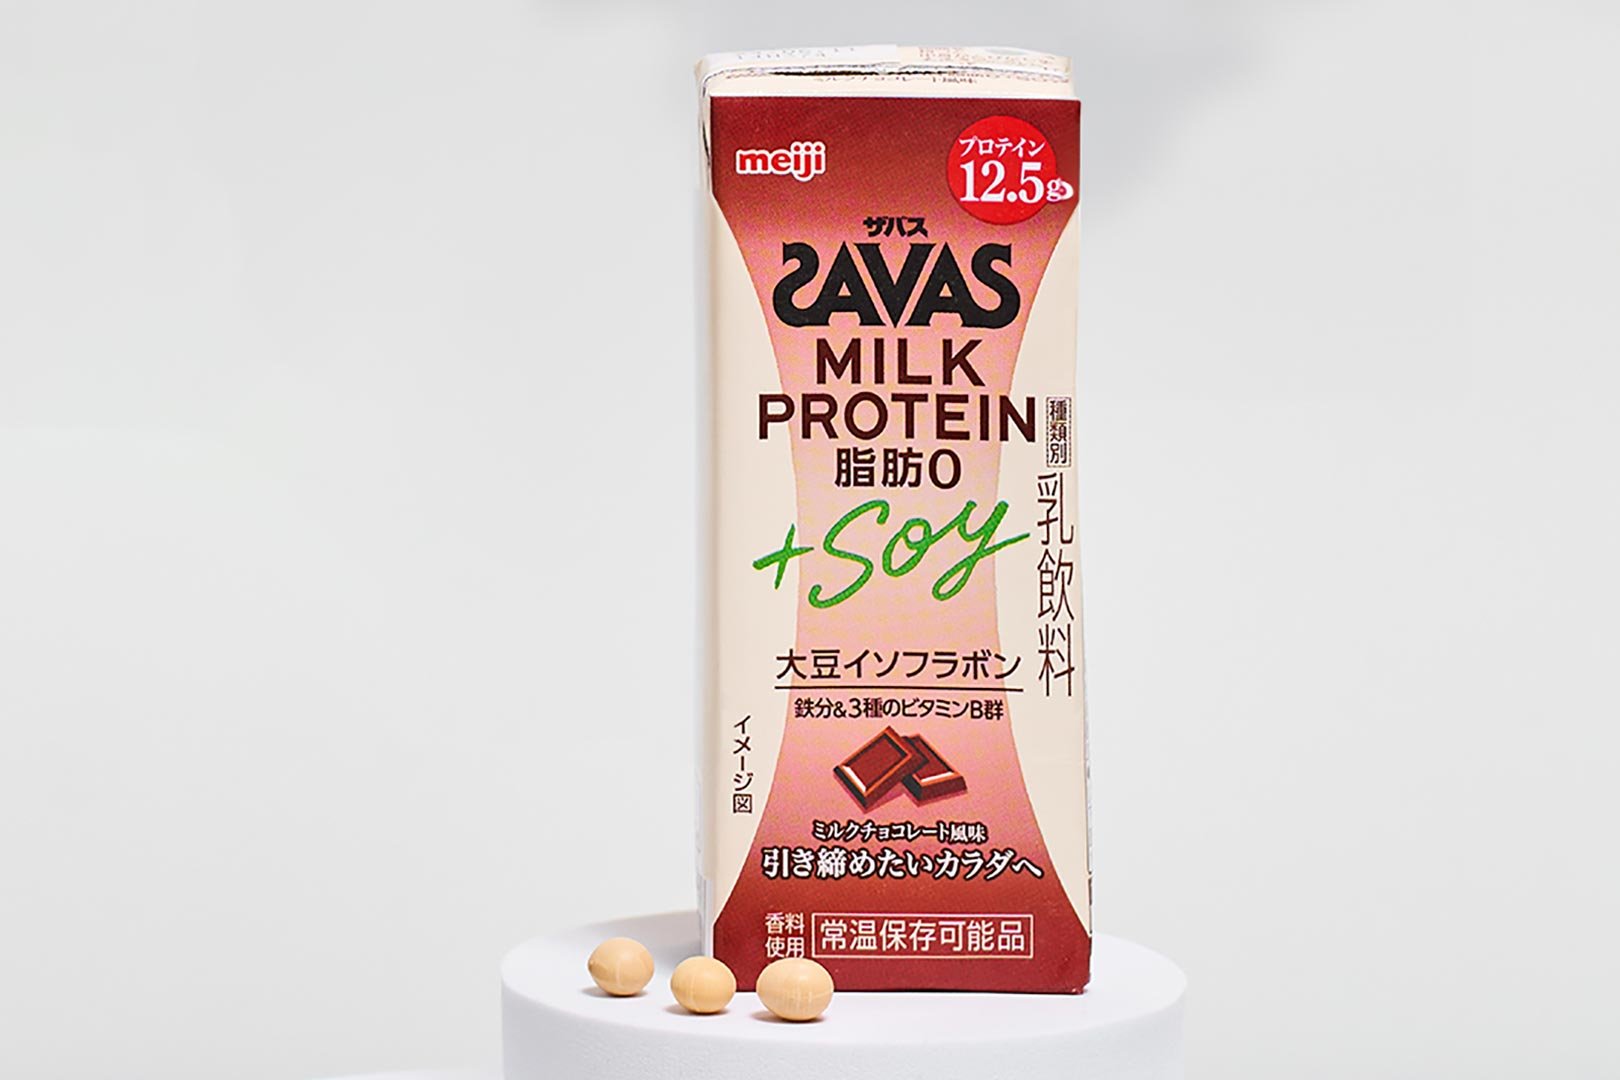 Savas Milk Chocolate Milk Protein Soy